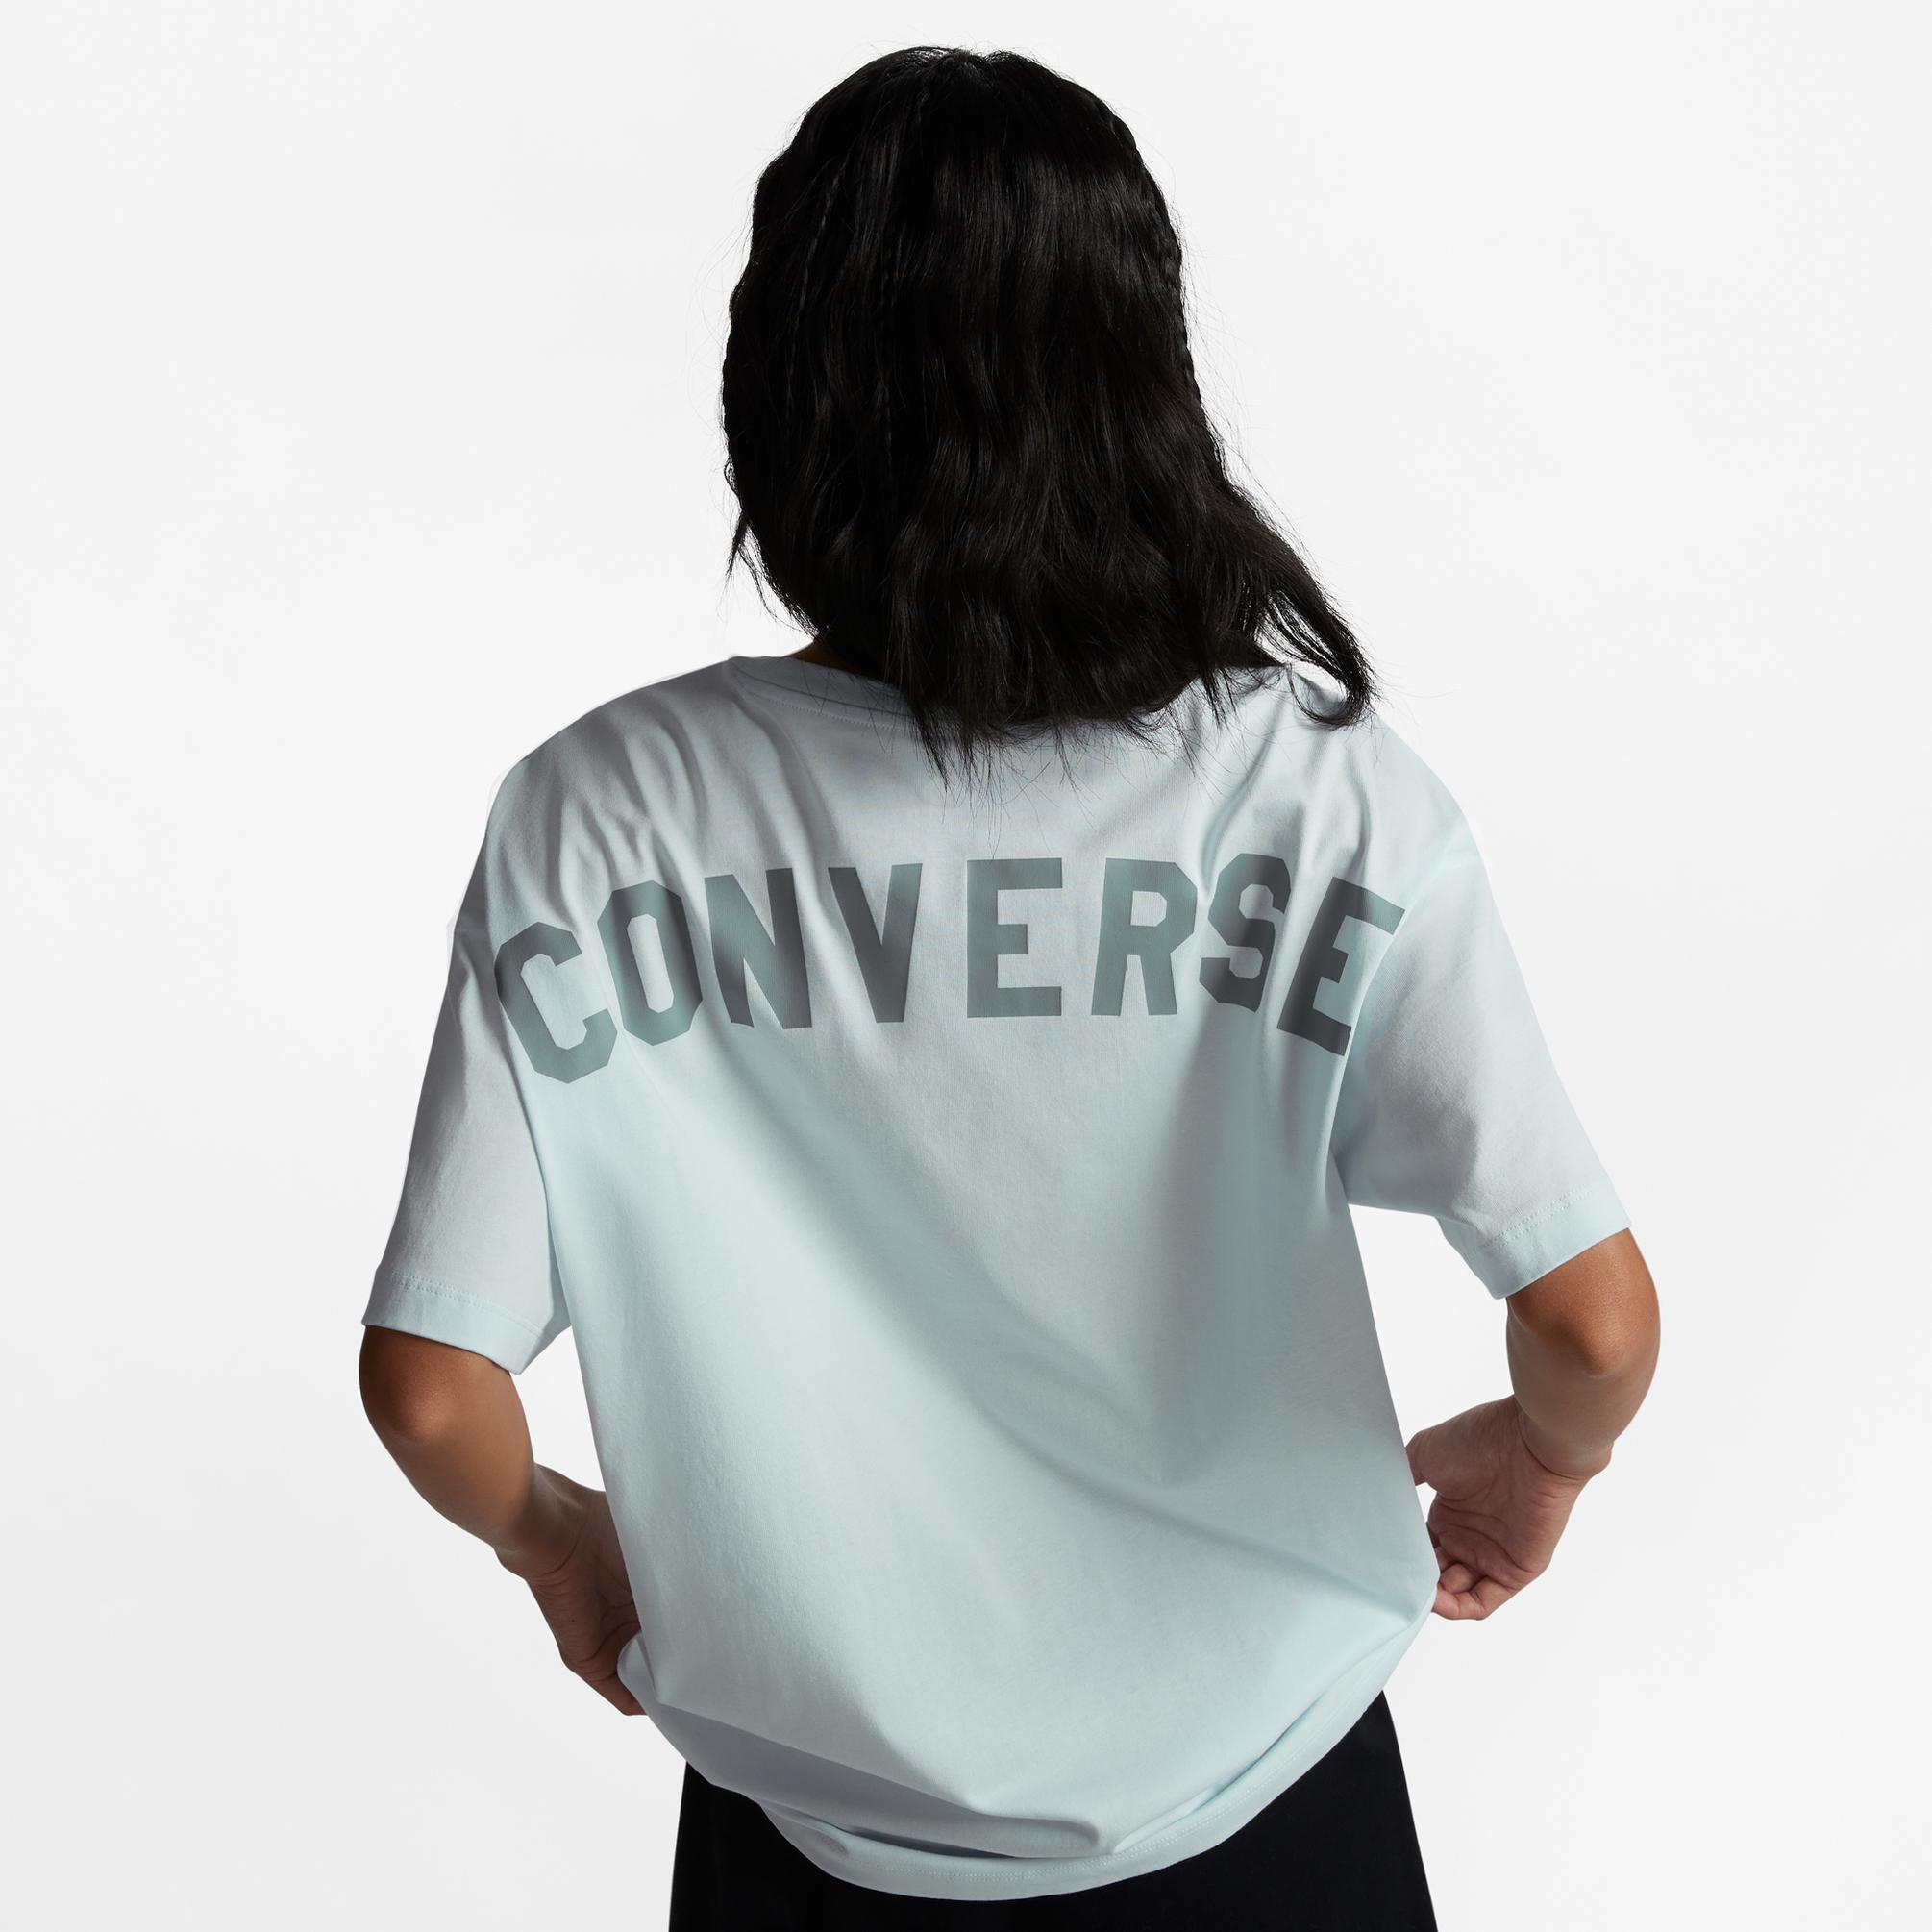  Converse Oversized All Star Kadın Mavi T-Shirt